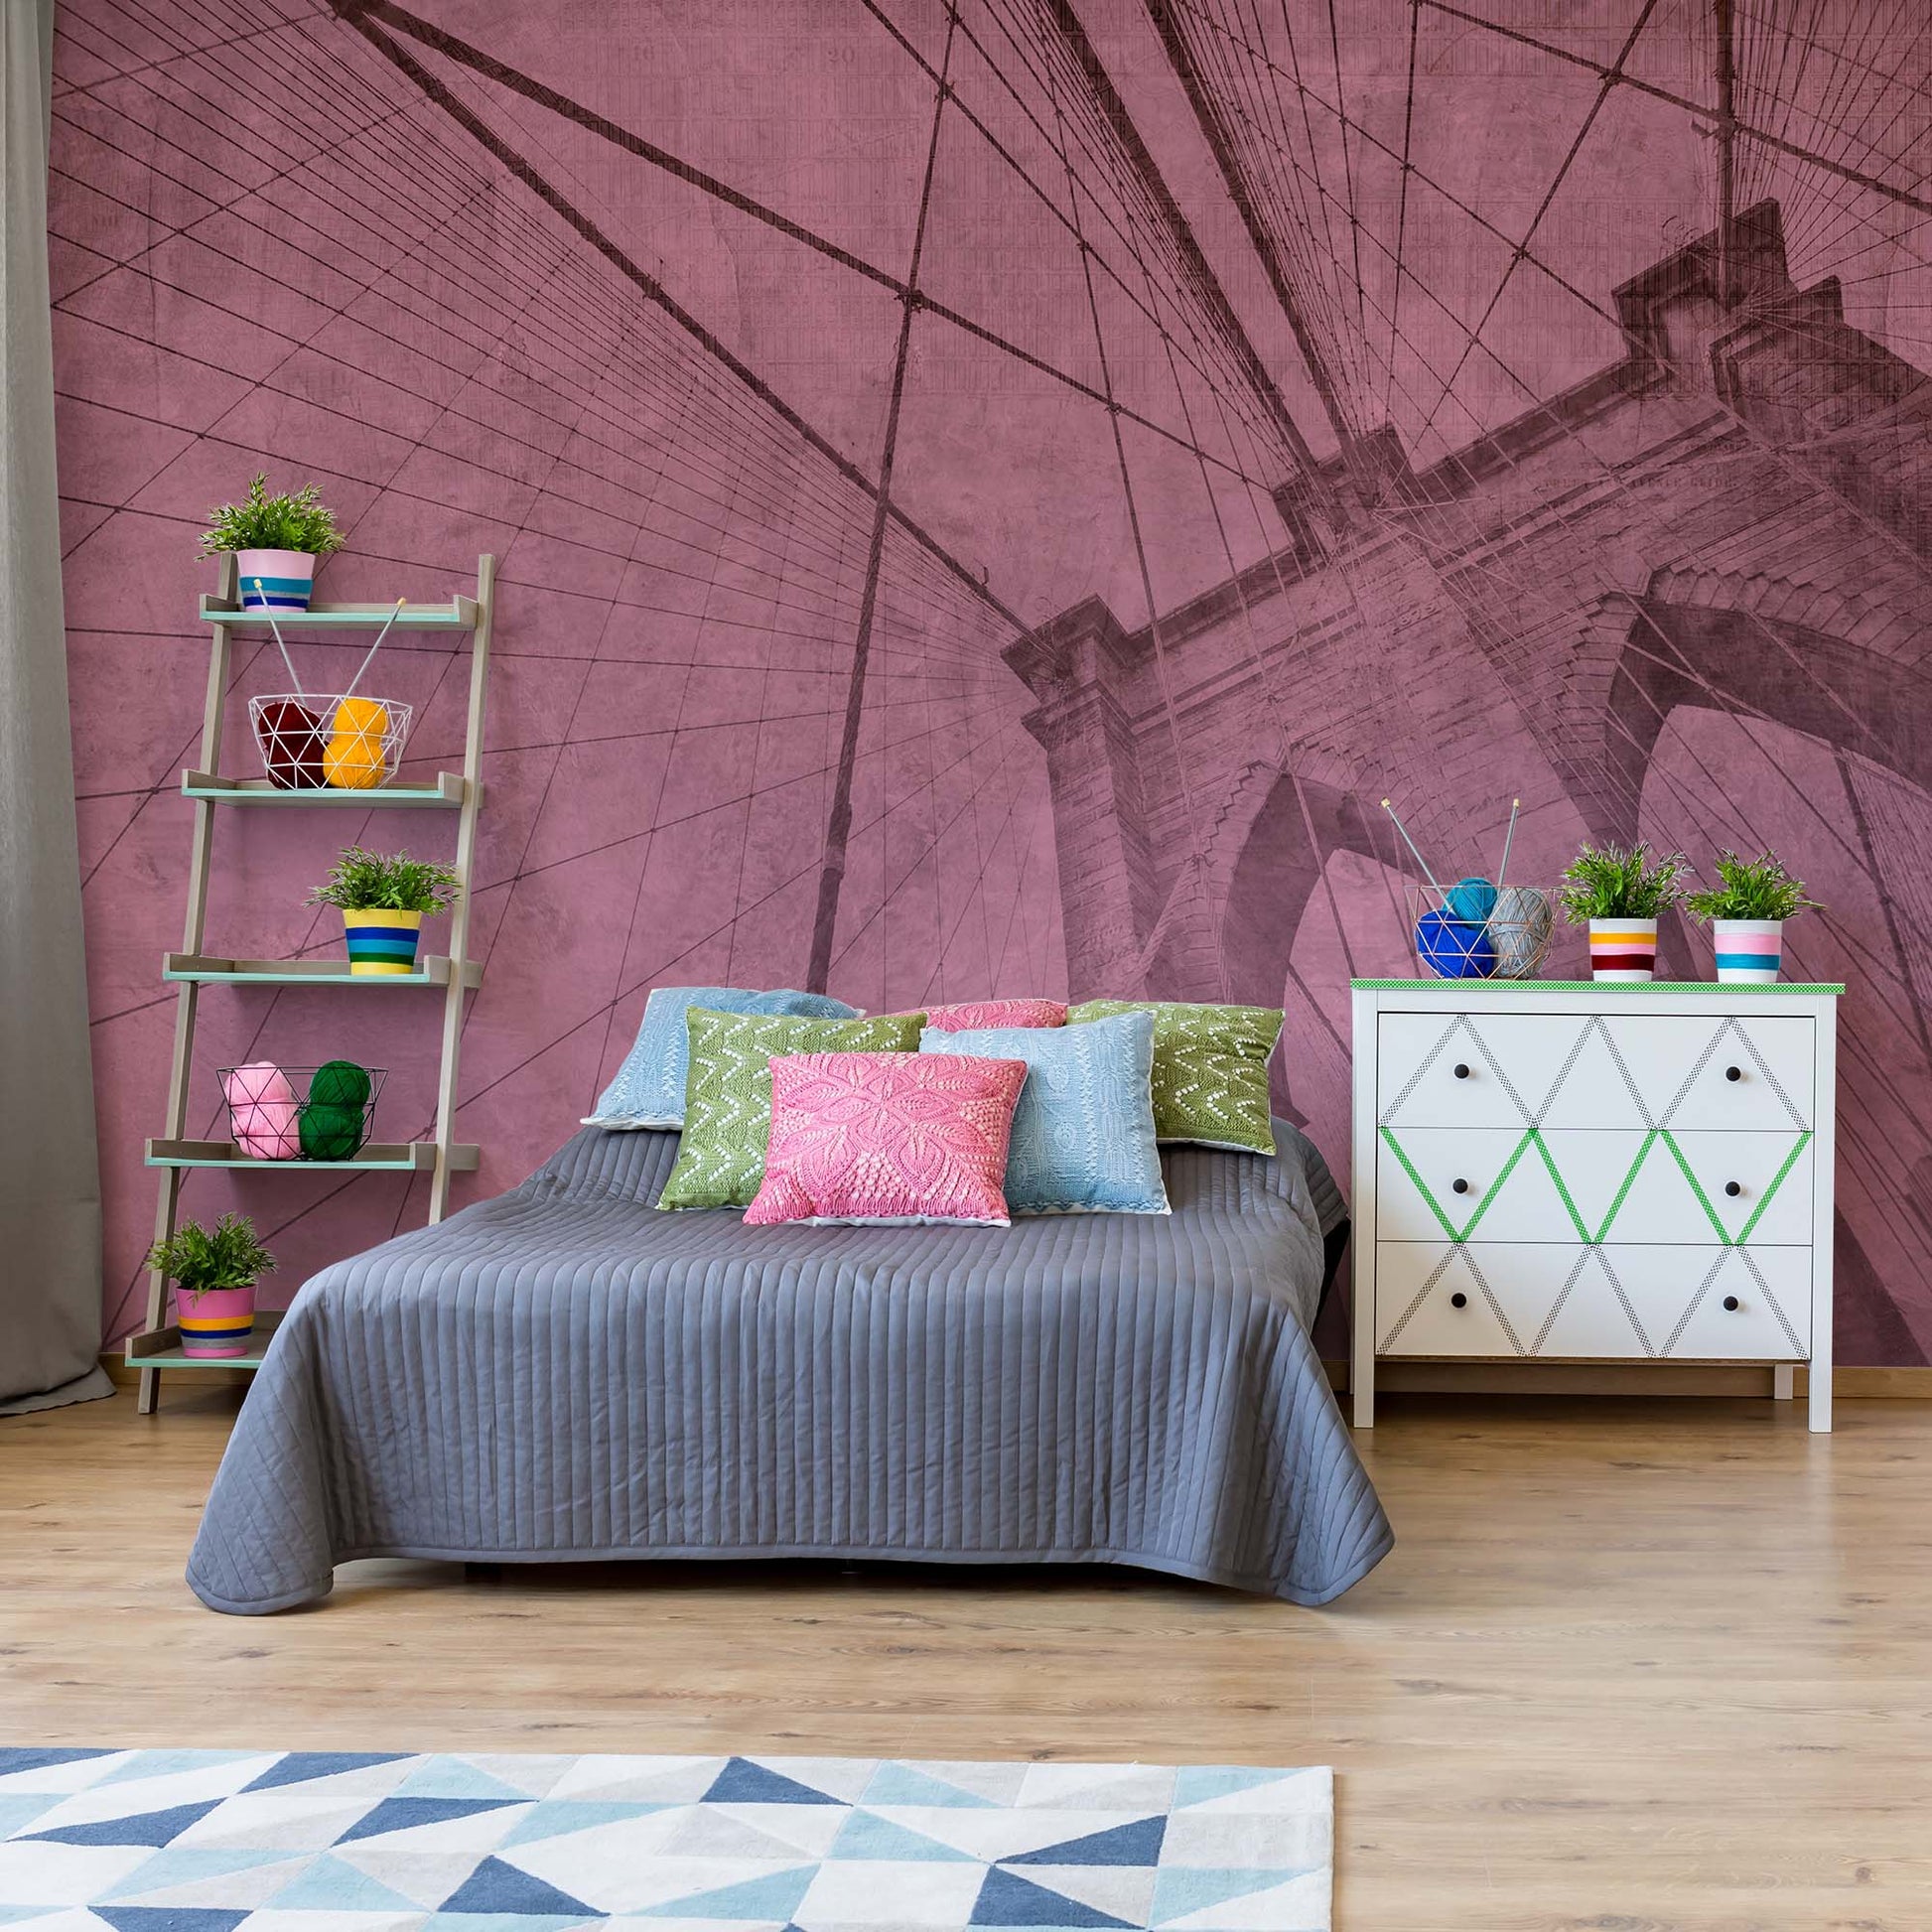 Brooklyn Bridge Grunge Pink Wallpaper - USTAD HOME